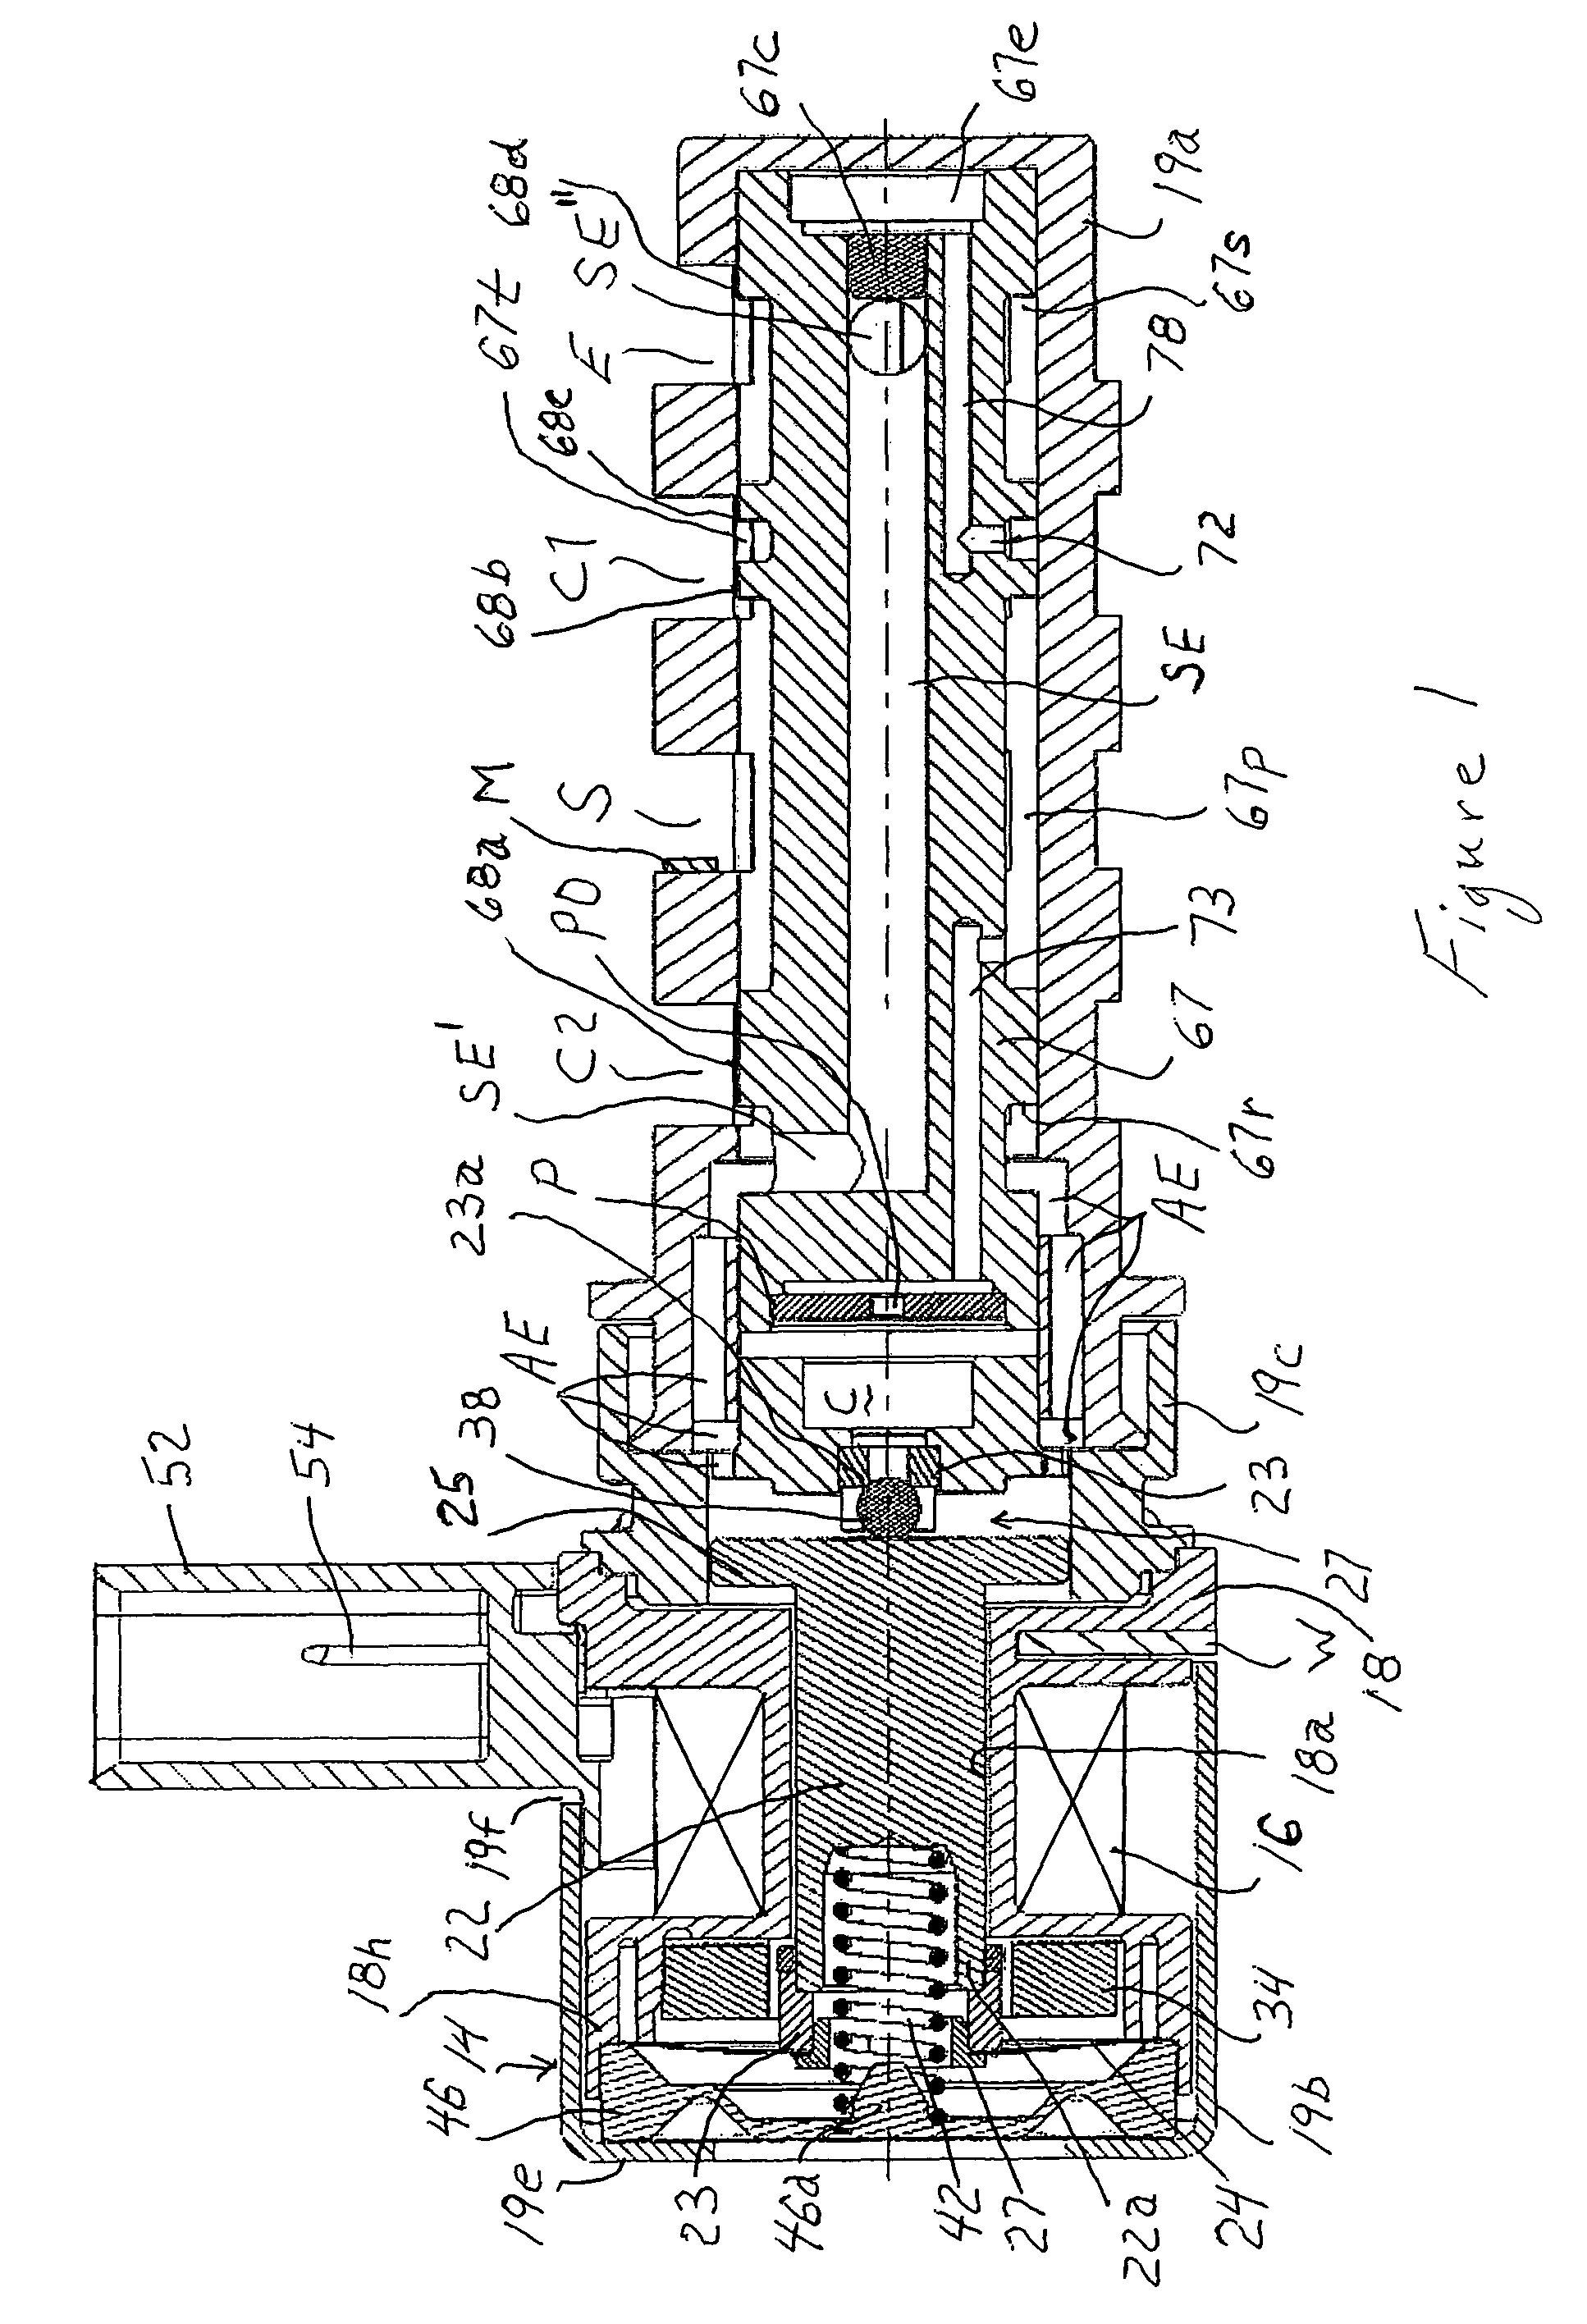 Solenoid operated fluid control valve